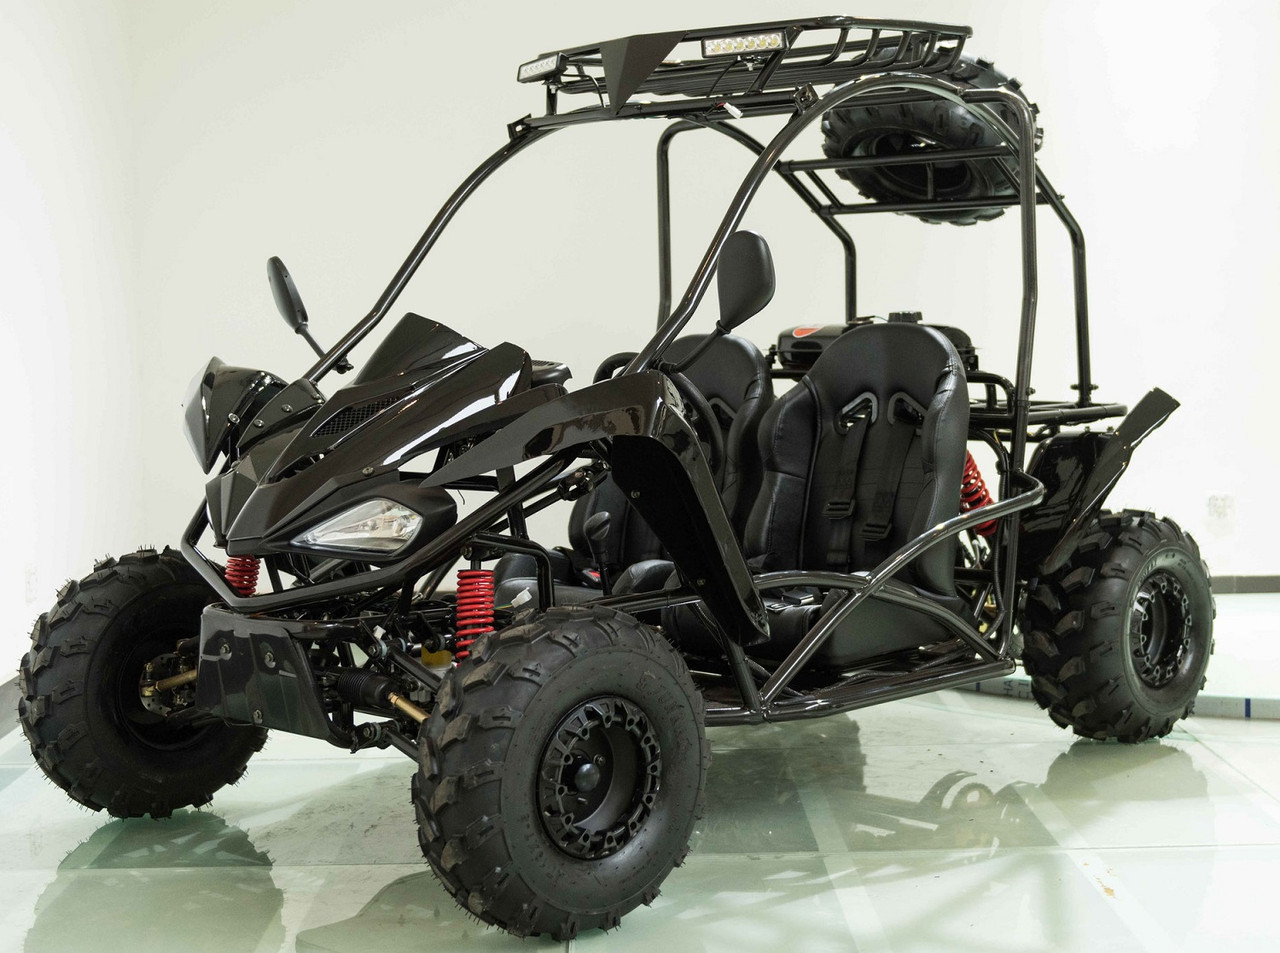 Vitacci Rebel 150cc Off-Road Go Kart, Single cylinder, forced air cooled, overhead camshaft - Black